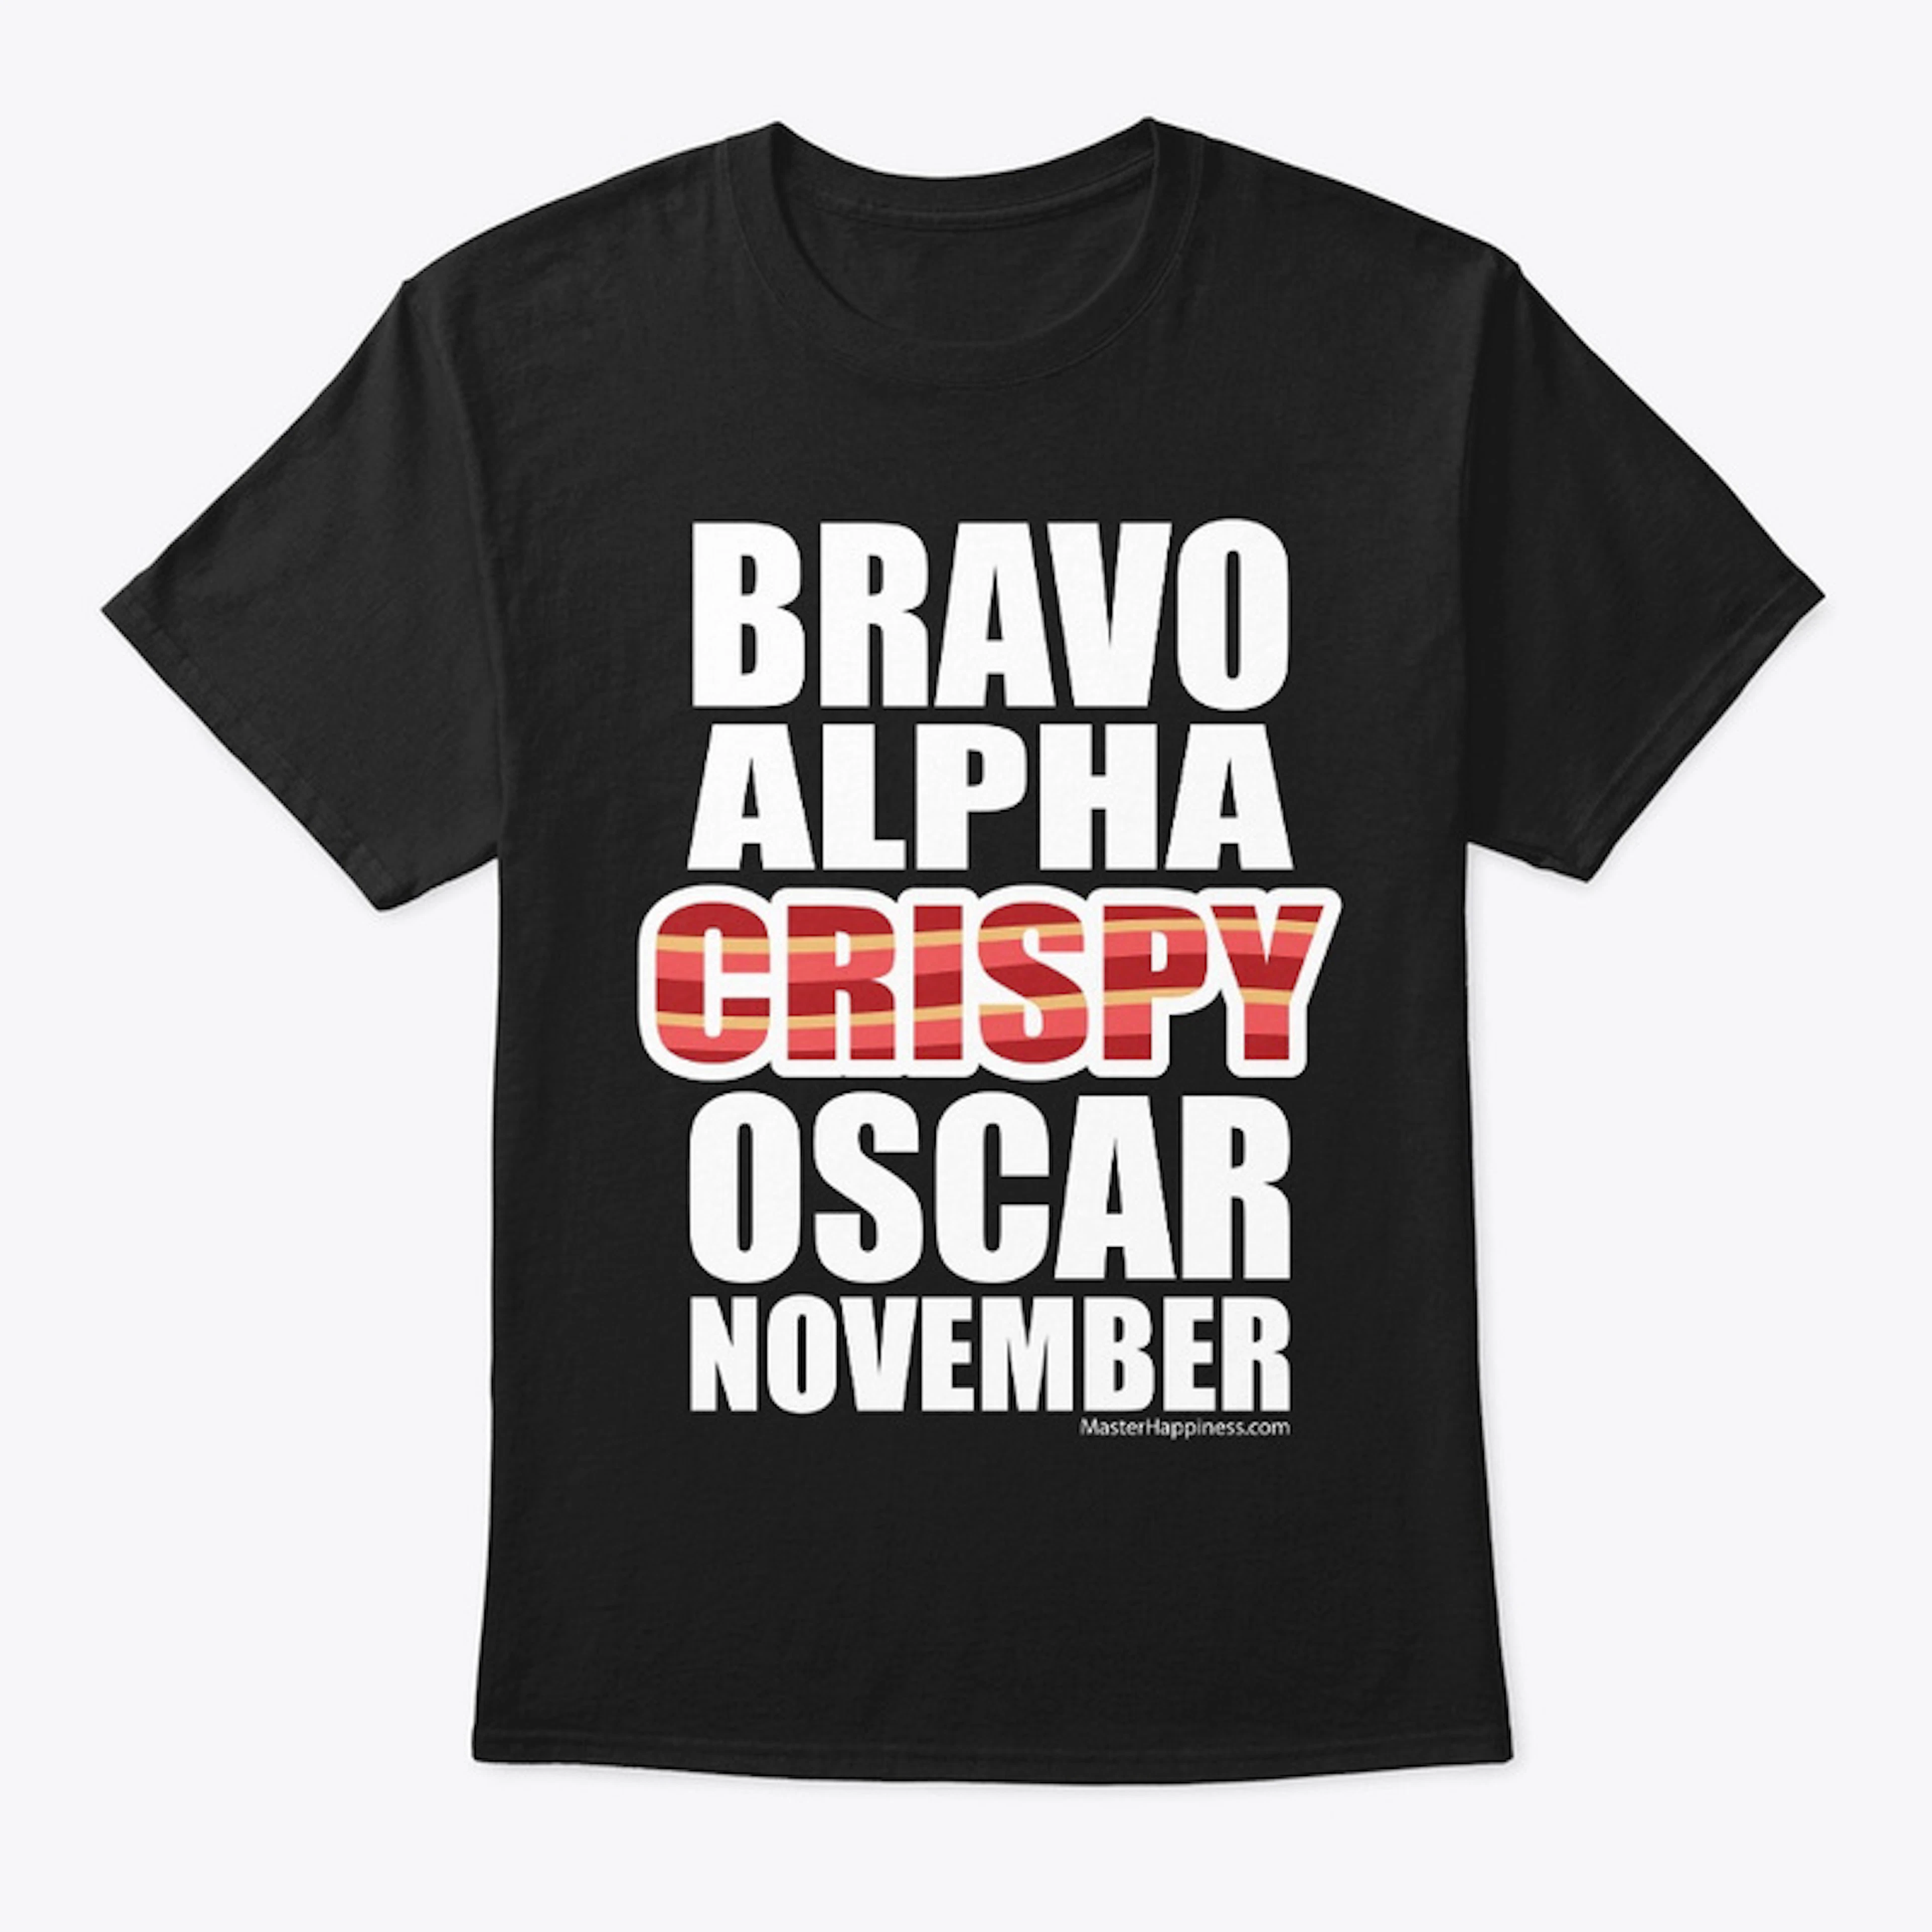 Bravo, Alpha, CRISPY, Oscar, November